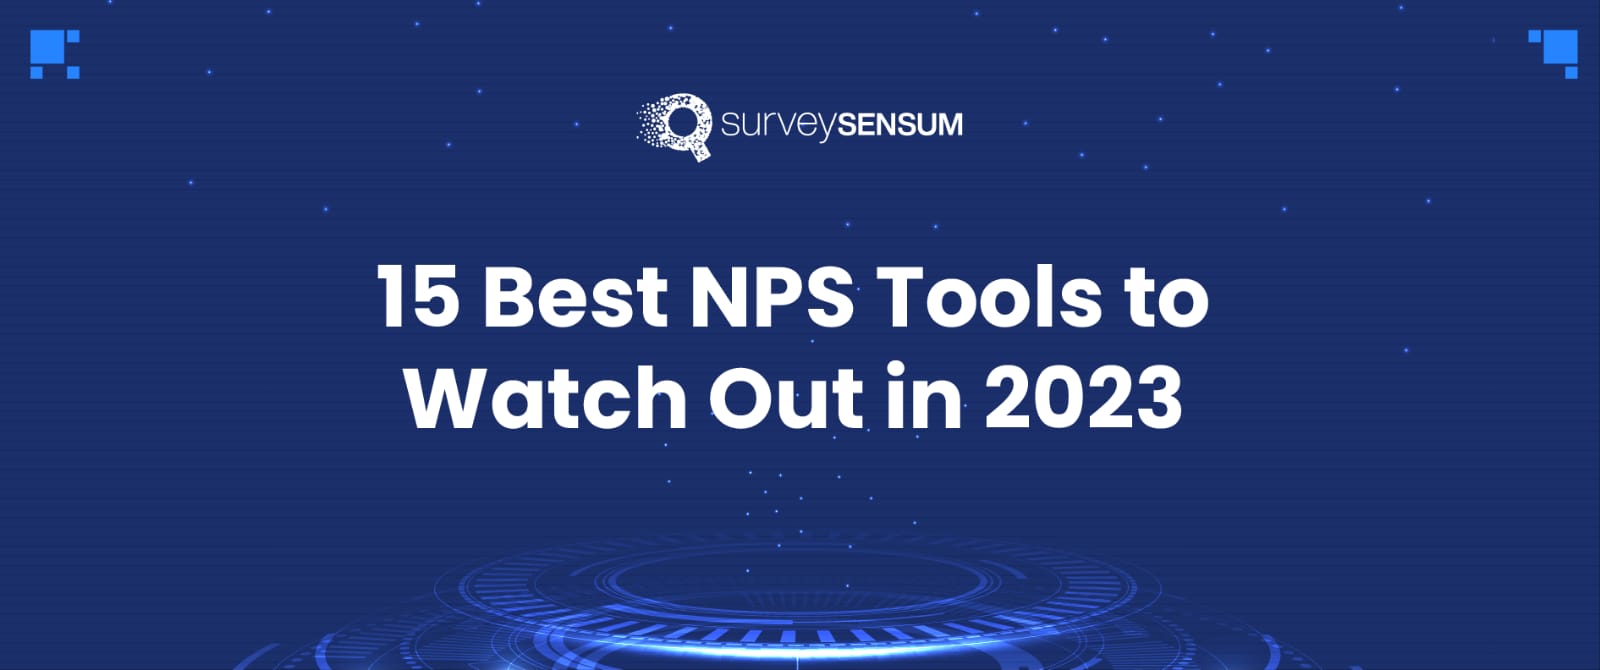 15 Best NPS Tools & Software in 2023